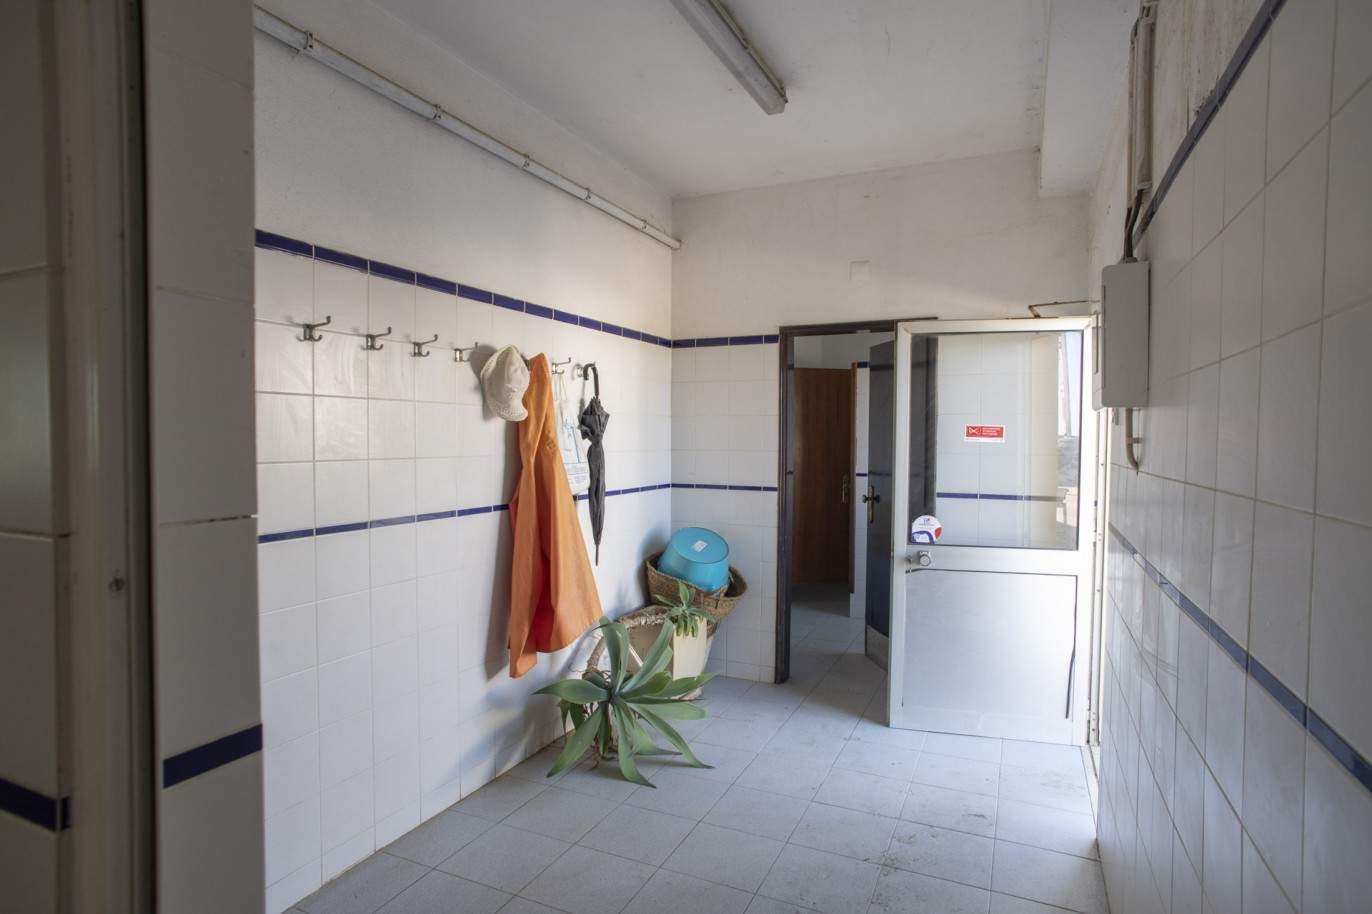 Property for sale in Ria Formosa, Algarve_209721